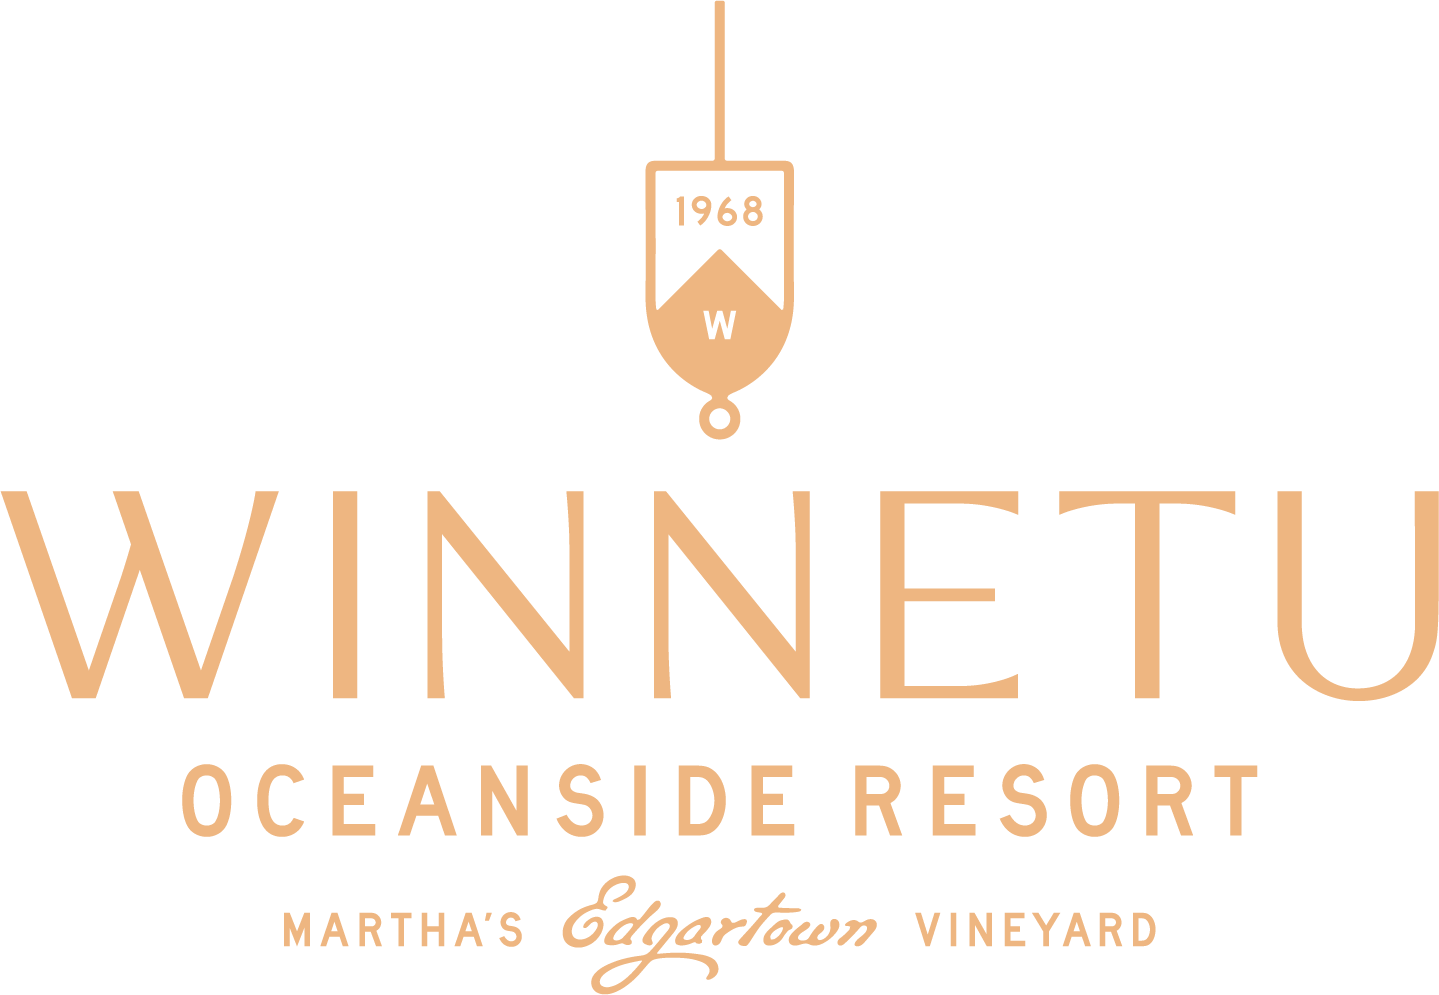 Winnetu Oceanside Resort footer logo